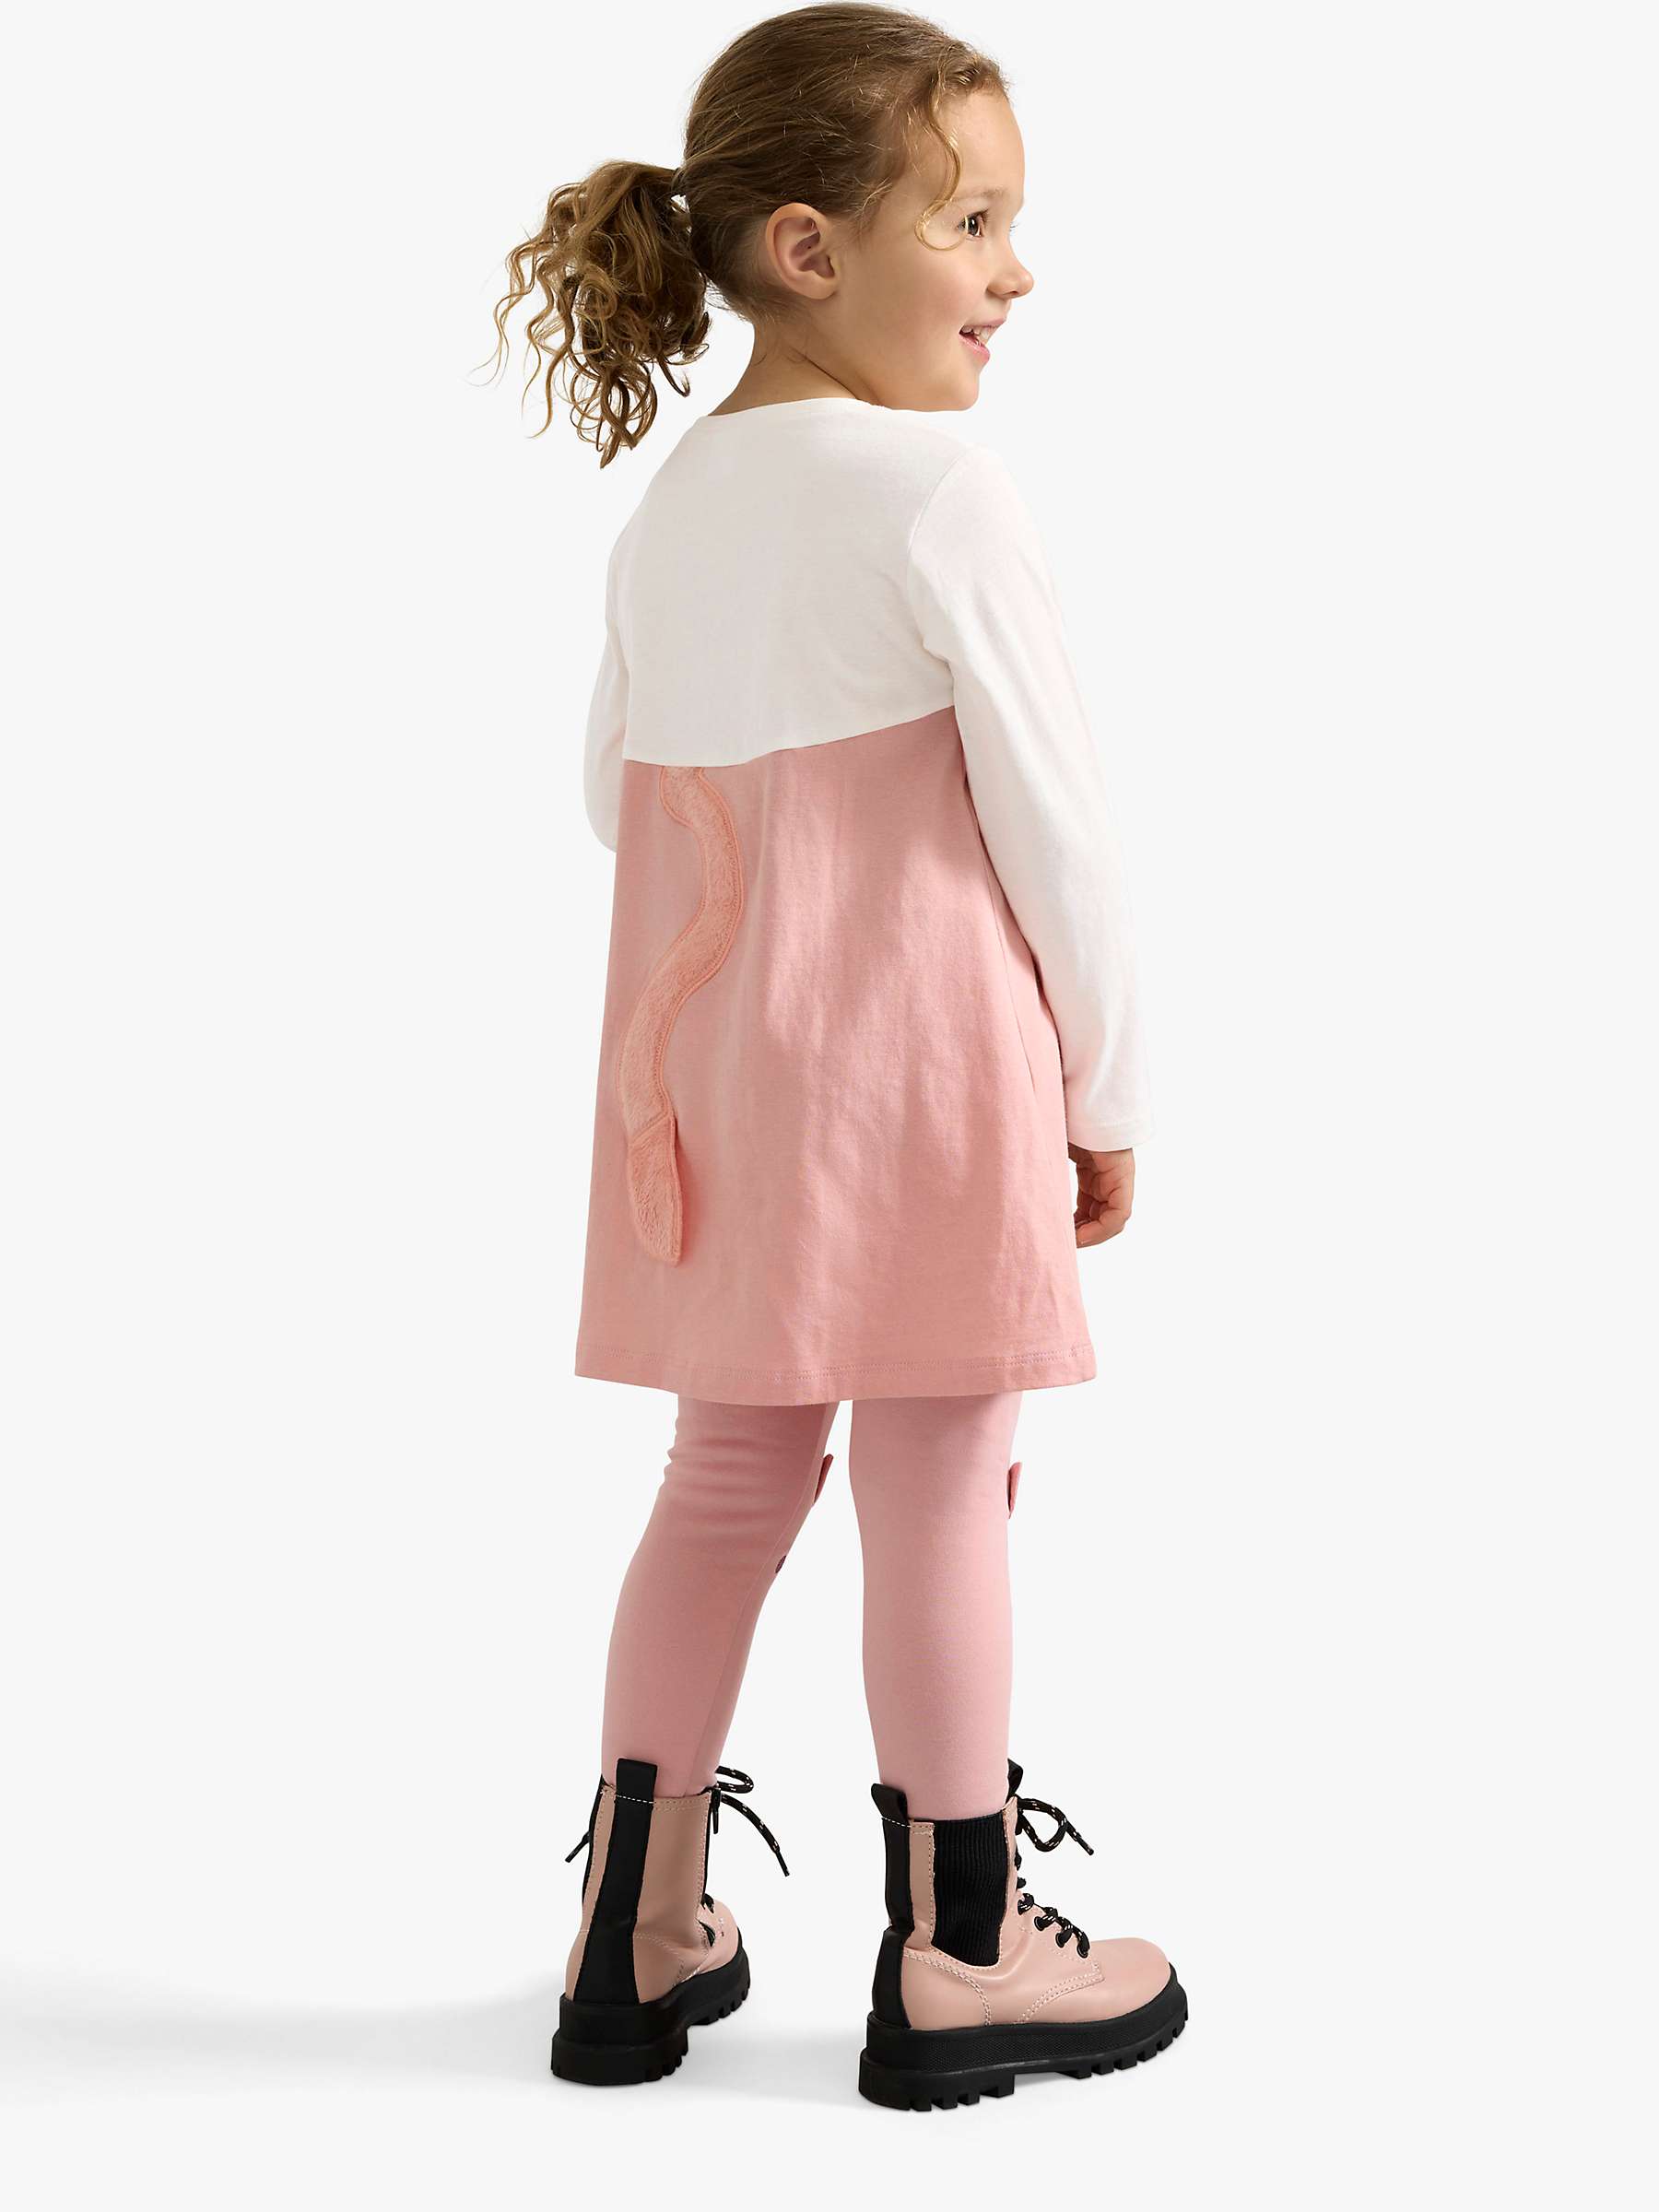 Buy Lindex Kids' Cat Face Tunic Top, Light Pink/Multi Online at johnlewis.com